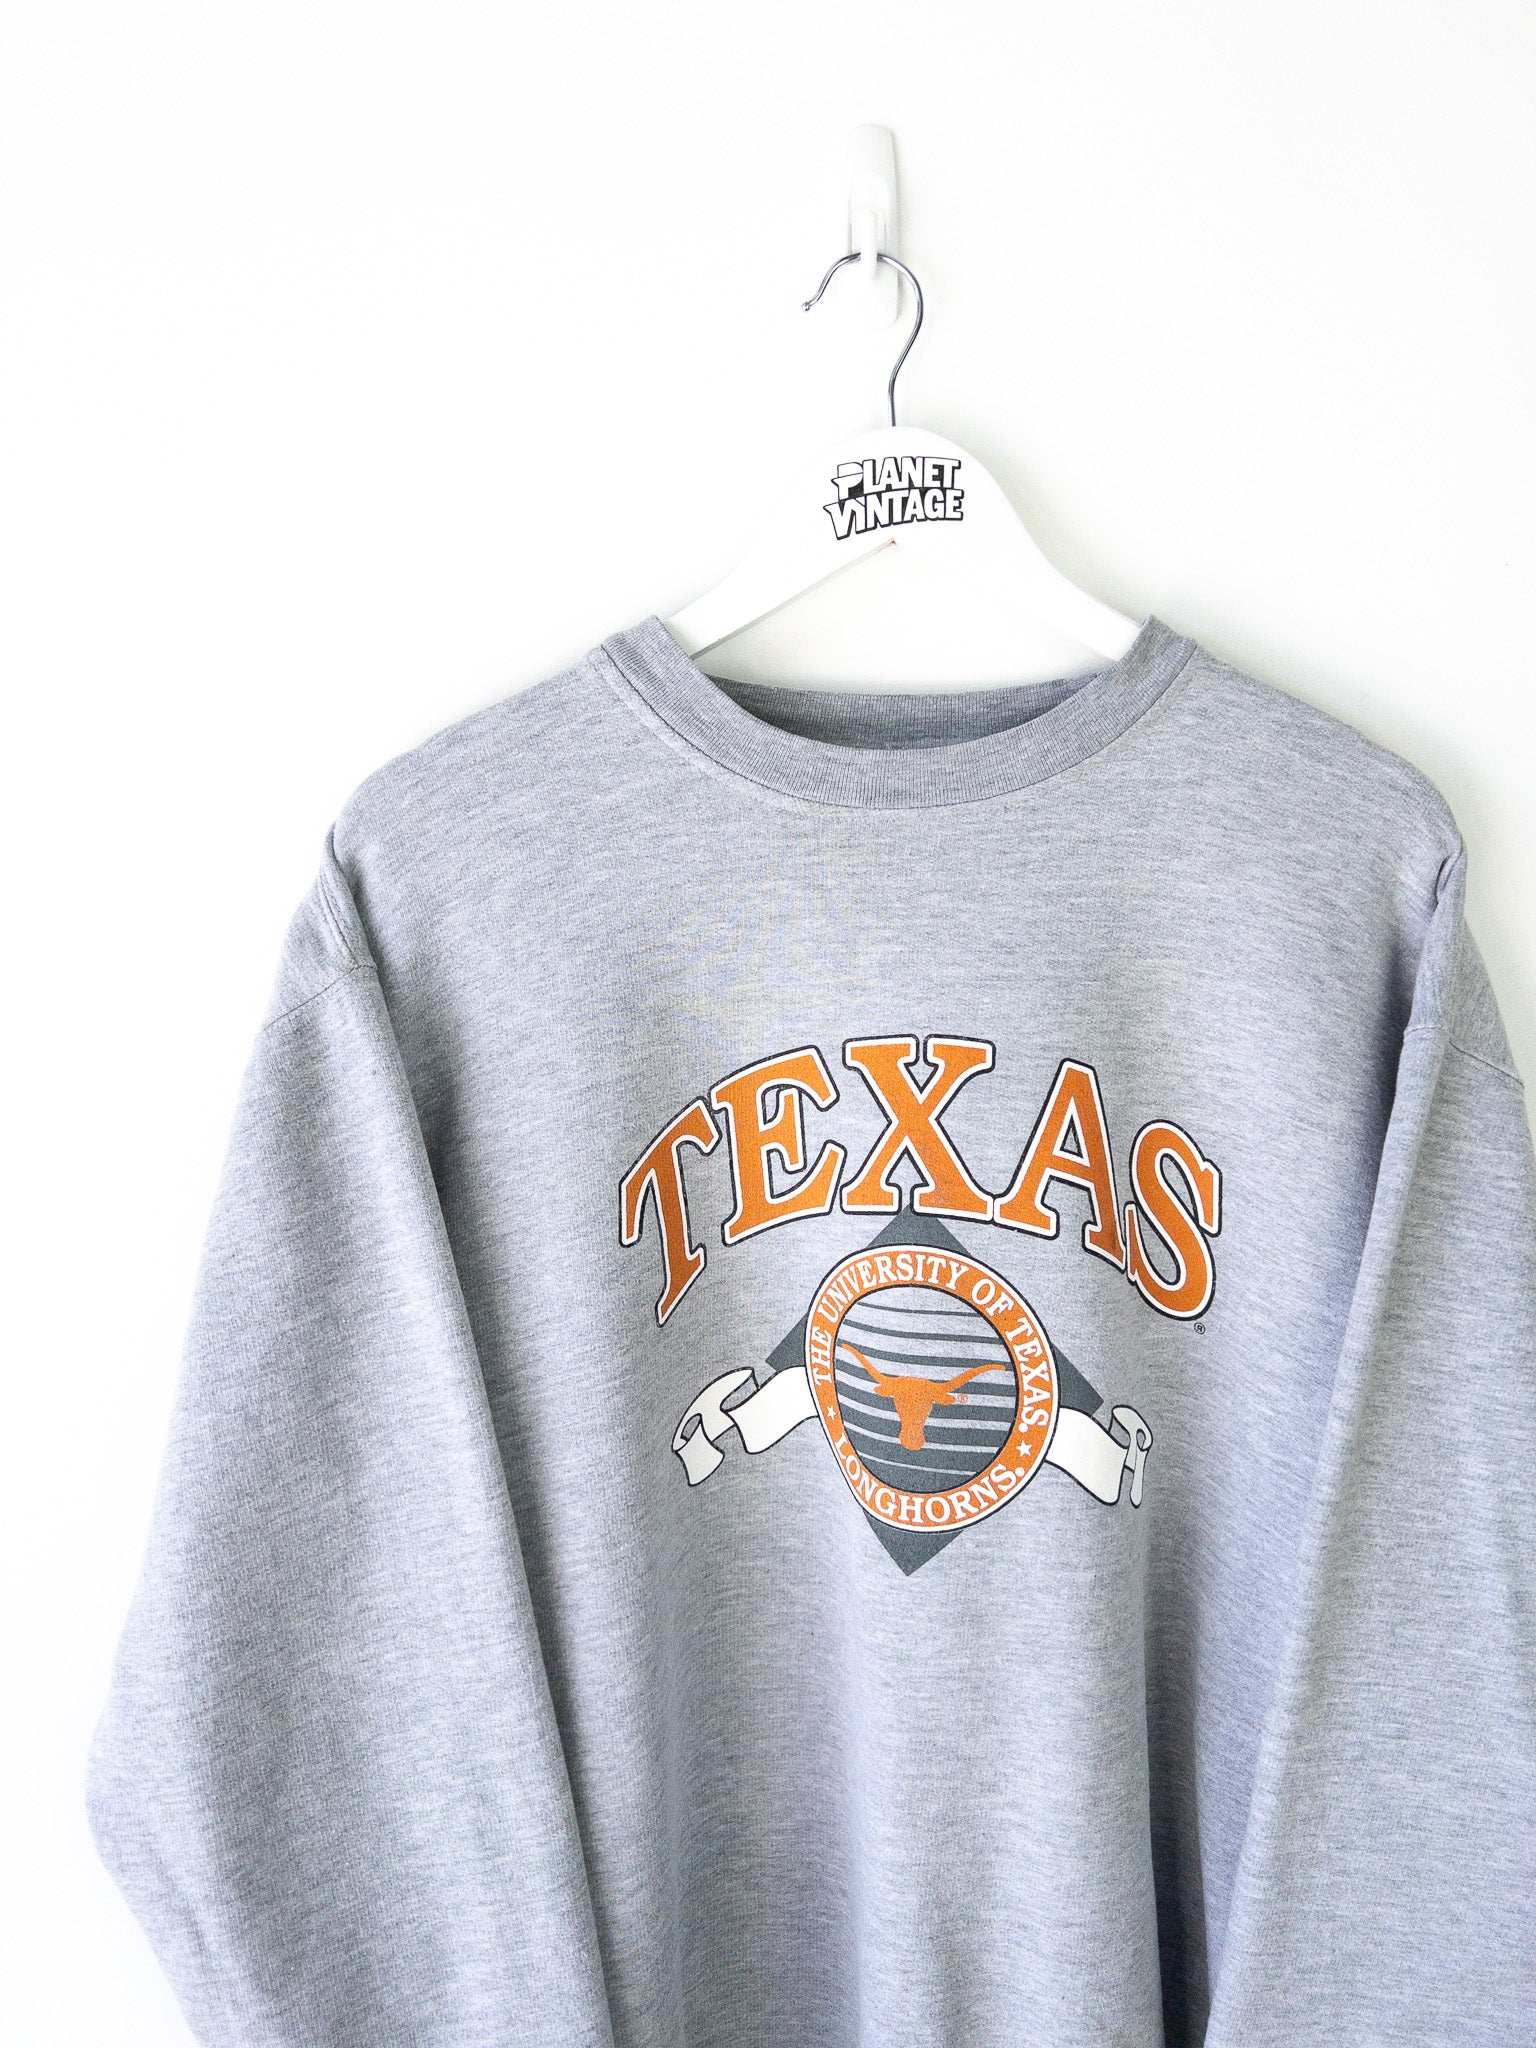 Vintage Texas Longhorns Sweatshirt (XL)